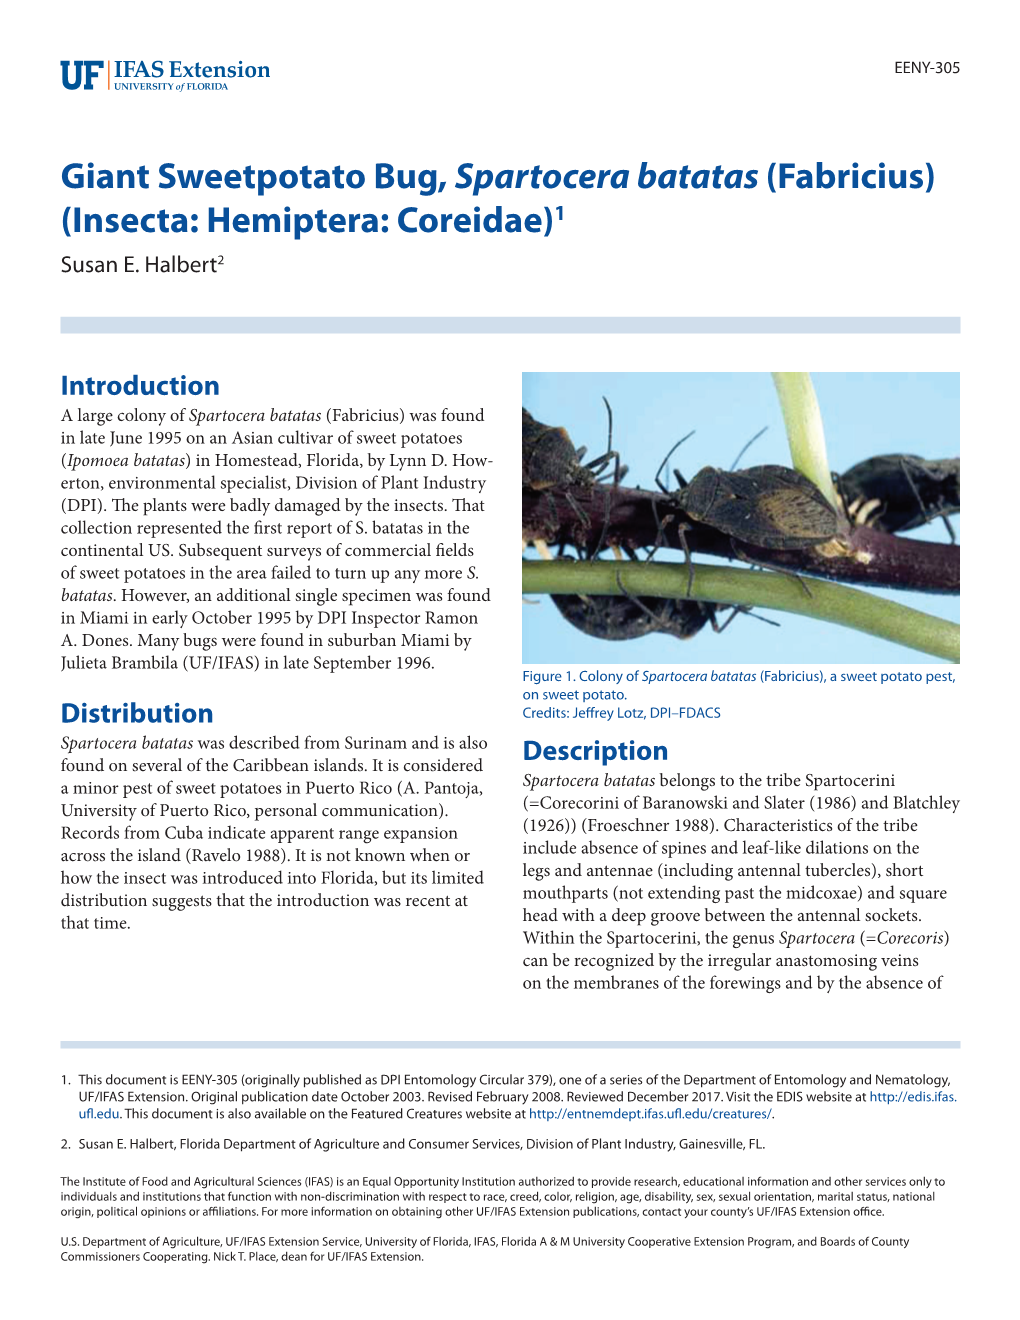 Giant Sweetpotato Bug, Spartocera Batatas (Fabricius) (Insecta: Hemiptera: Coreidae)1 Susan E